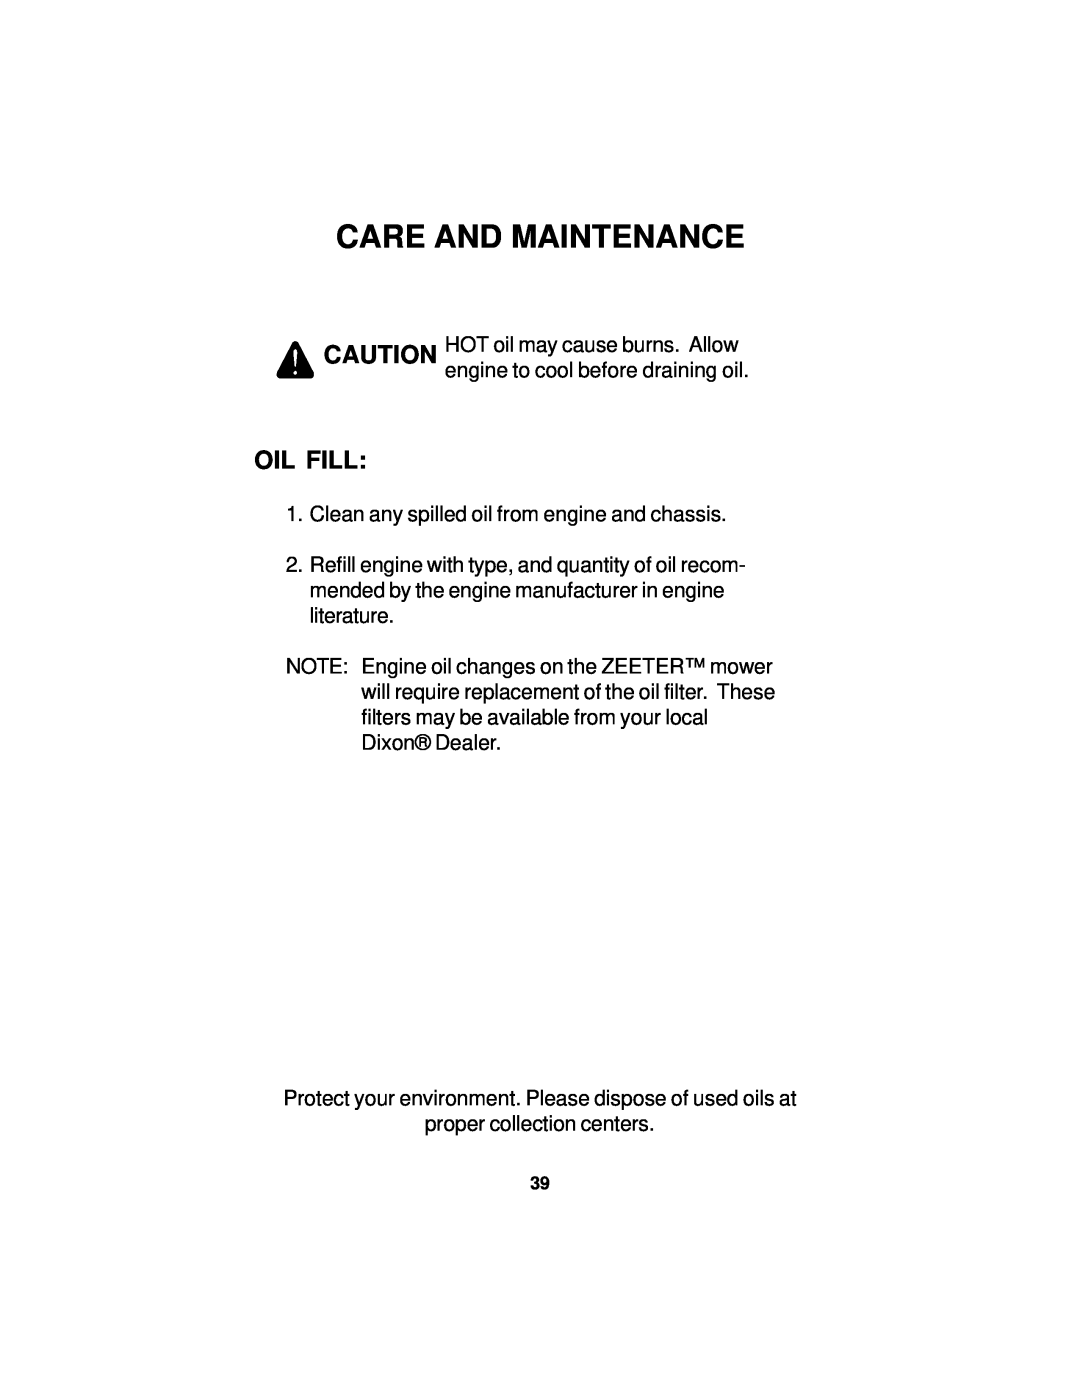 Dixon 14295-0804 manual Oil Fill, Care And Maintenance 